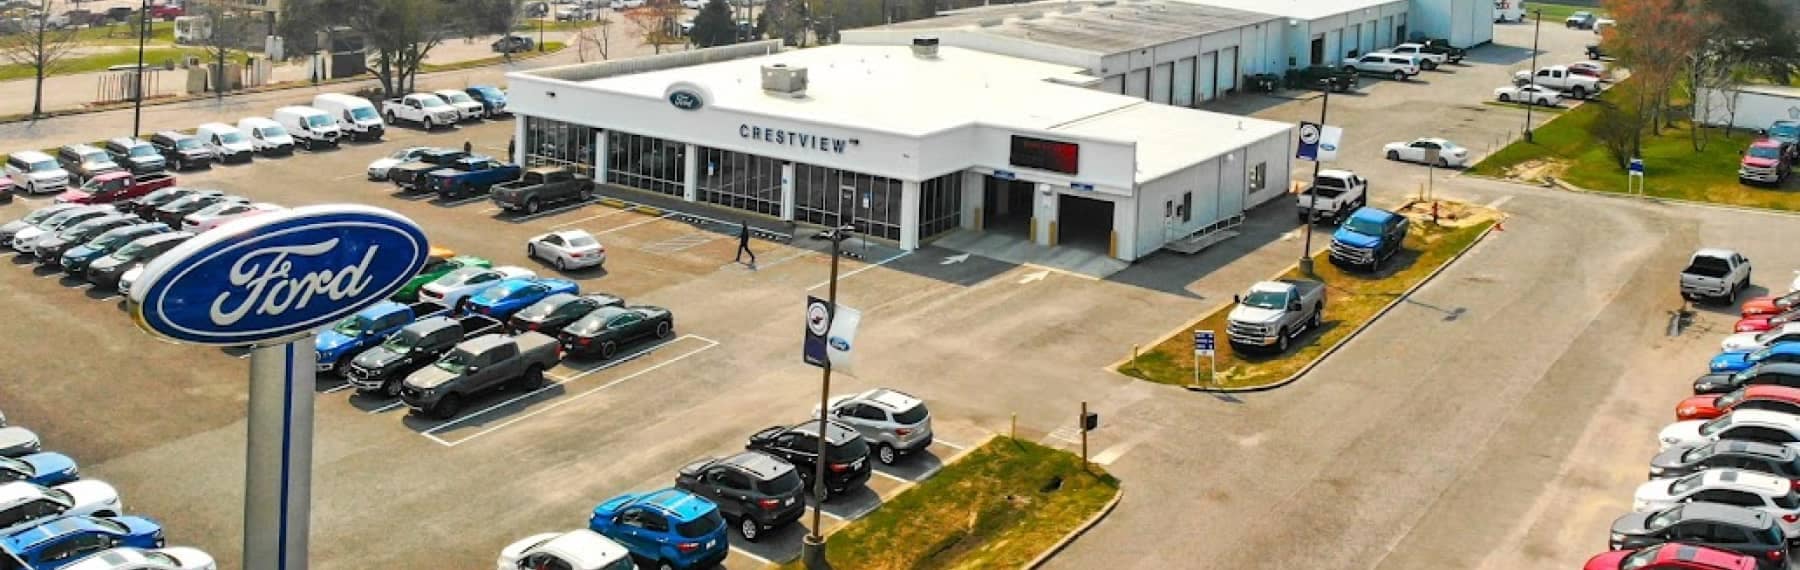 Ford Crestview Storefront